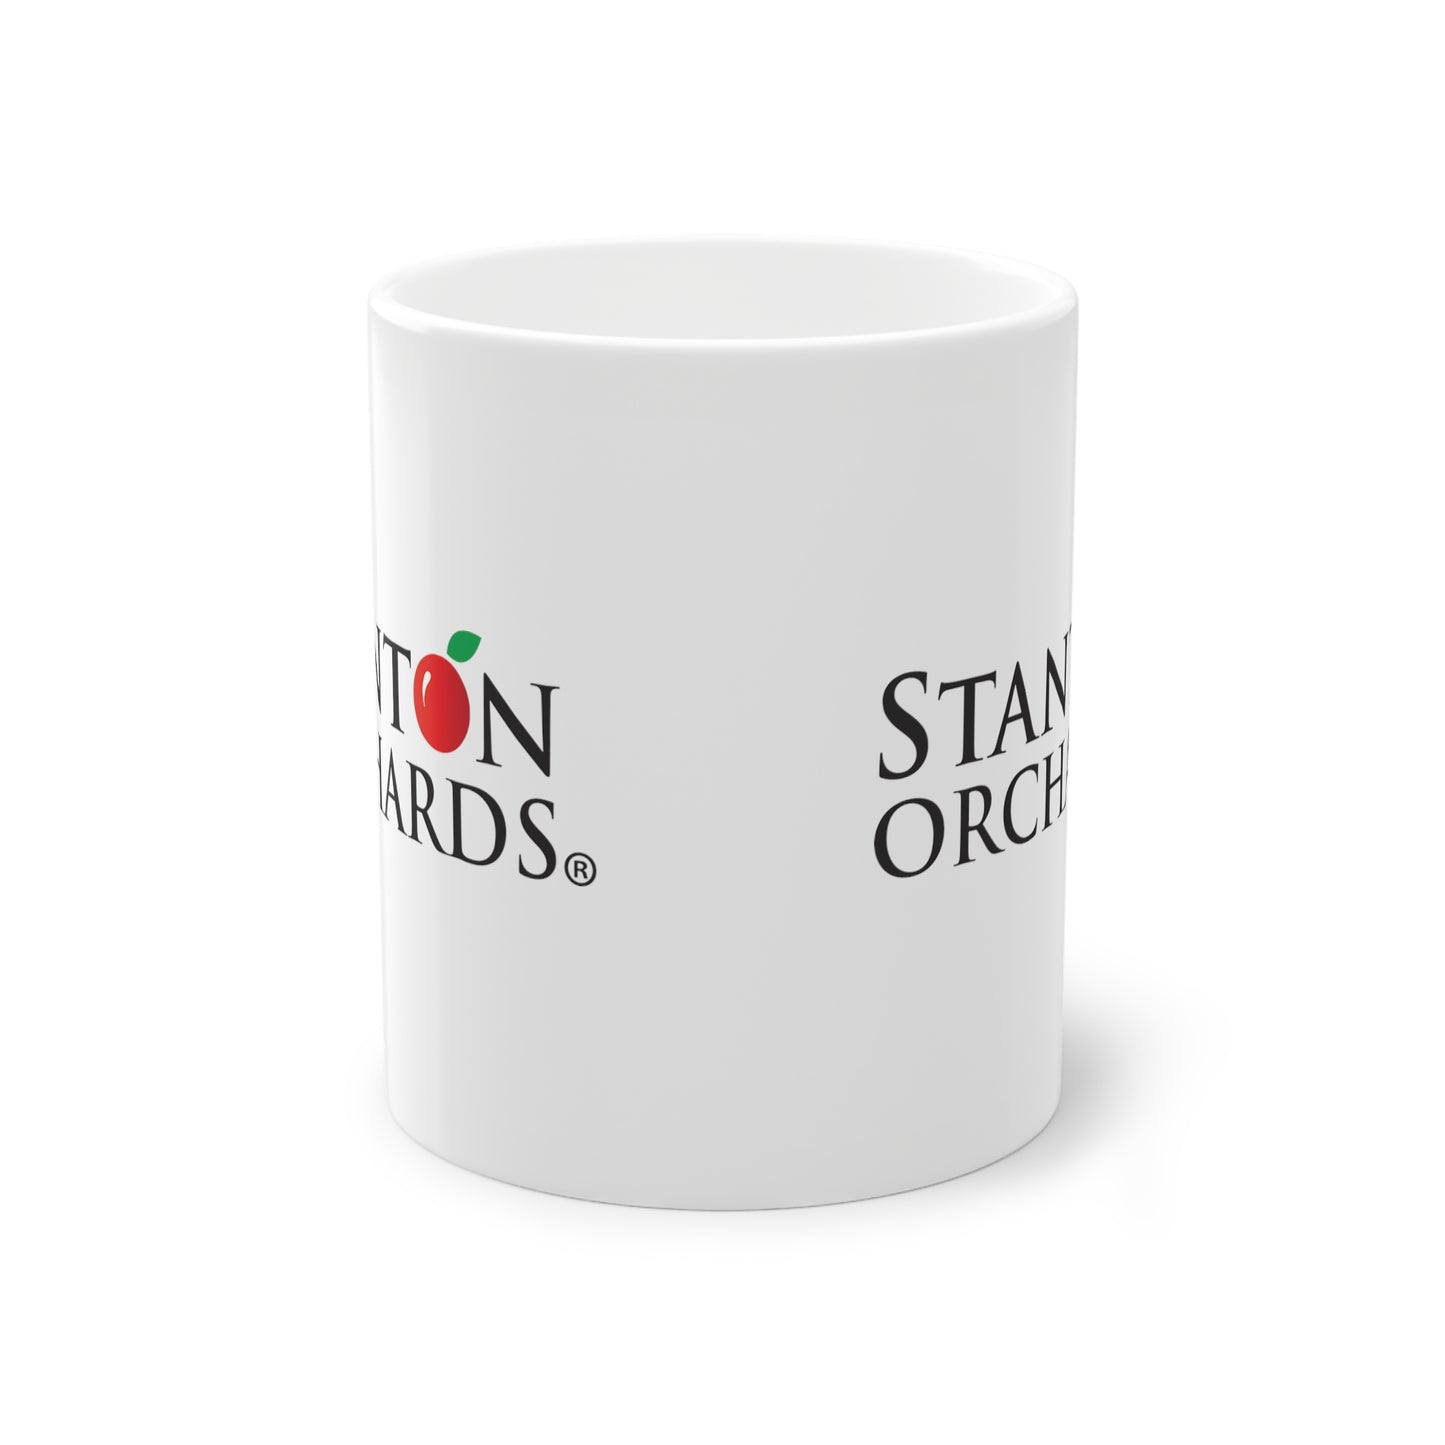 Standard Mug, 11oz with Stanton Orchards Logo